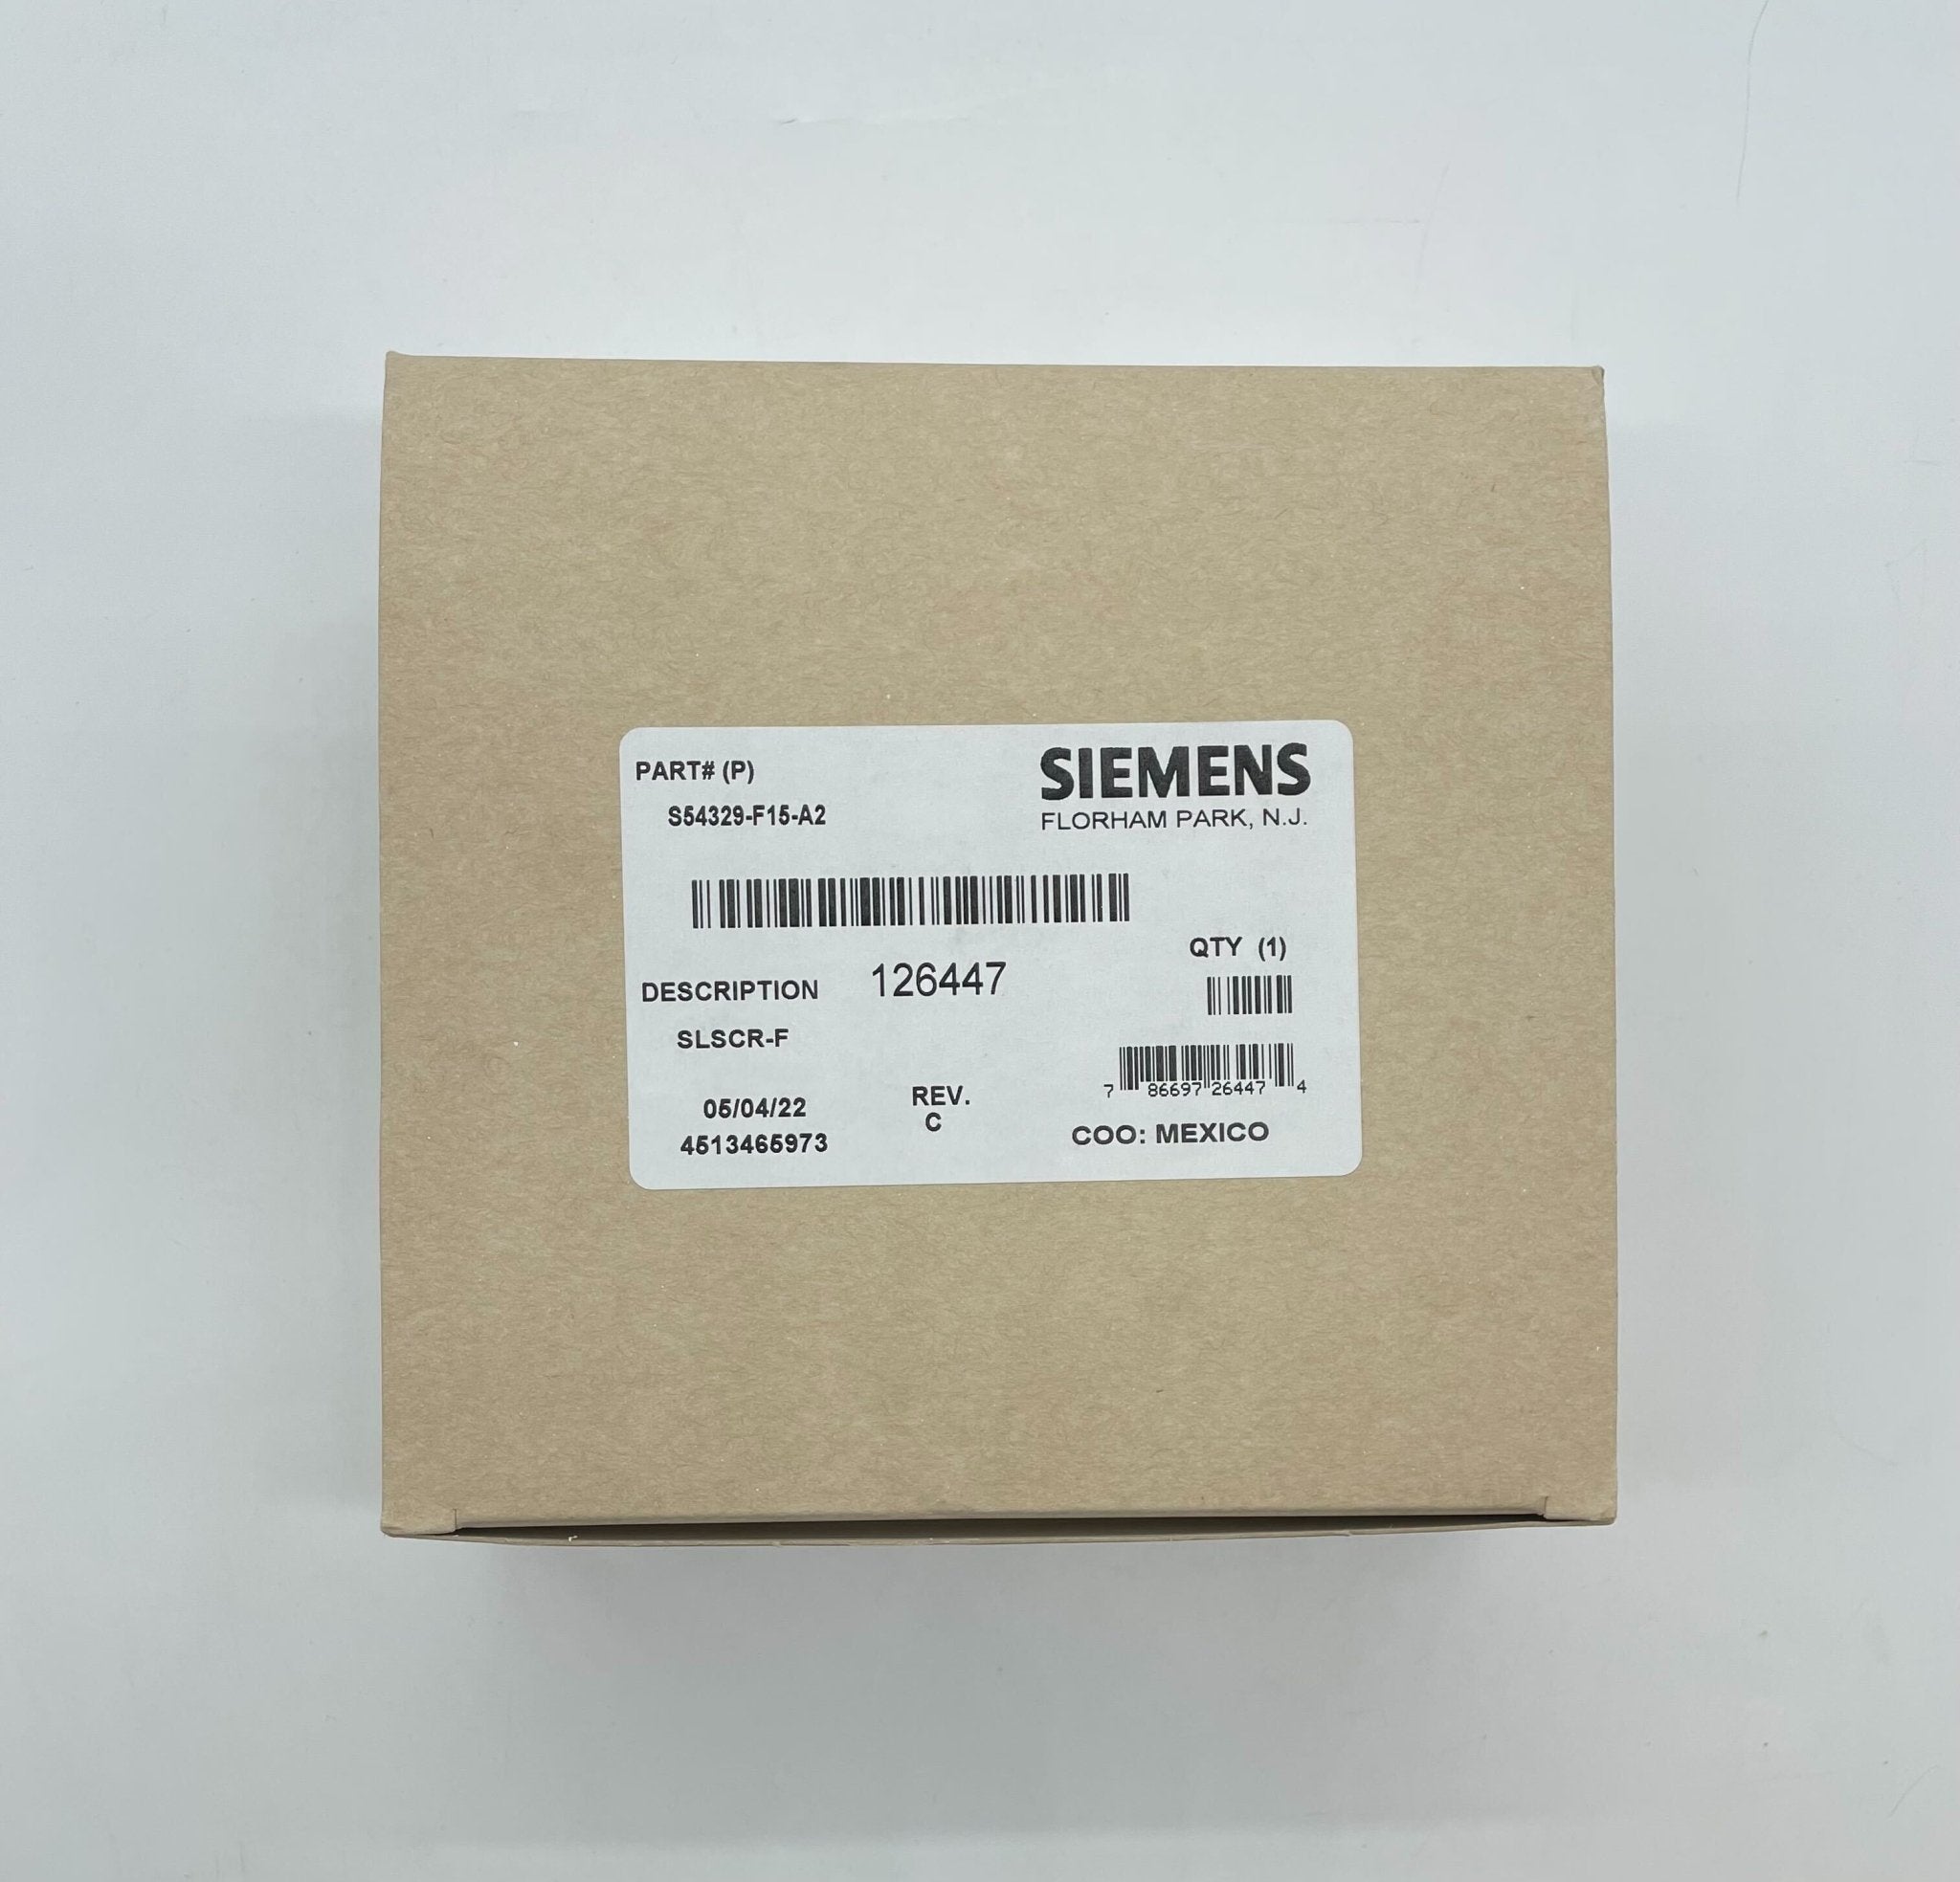 Siemens SLSCR-F - The Fire Alarm Supplier